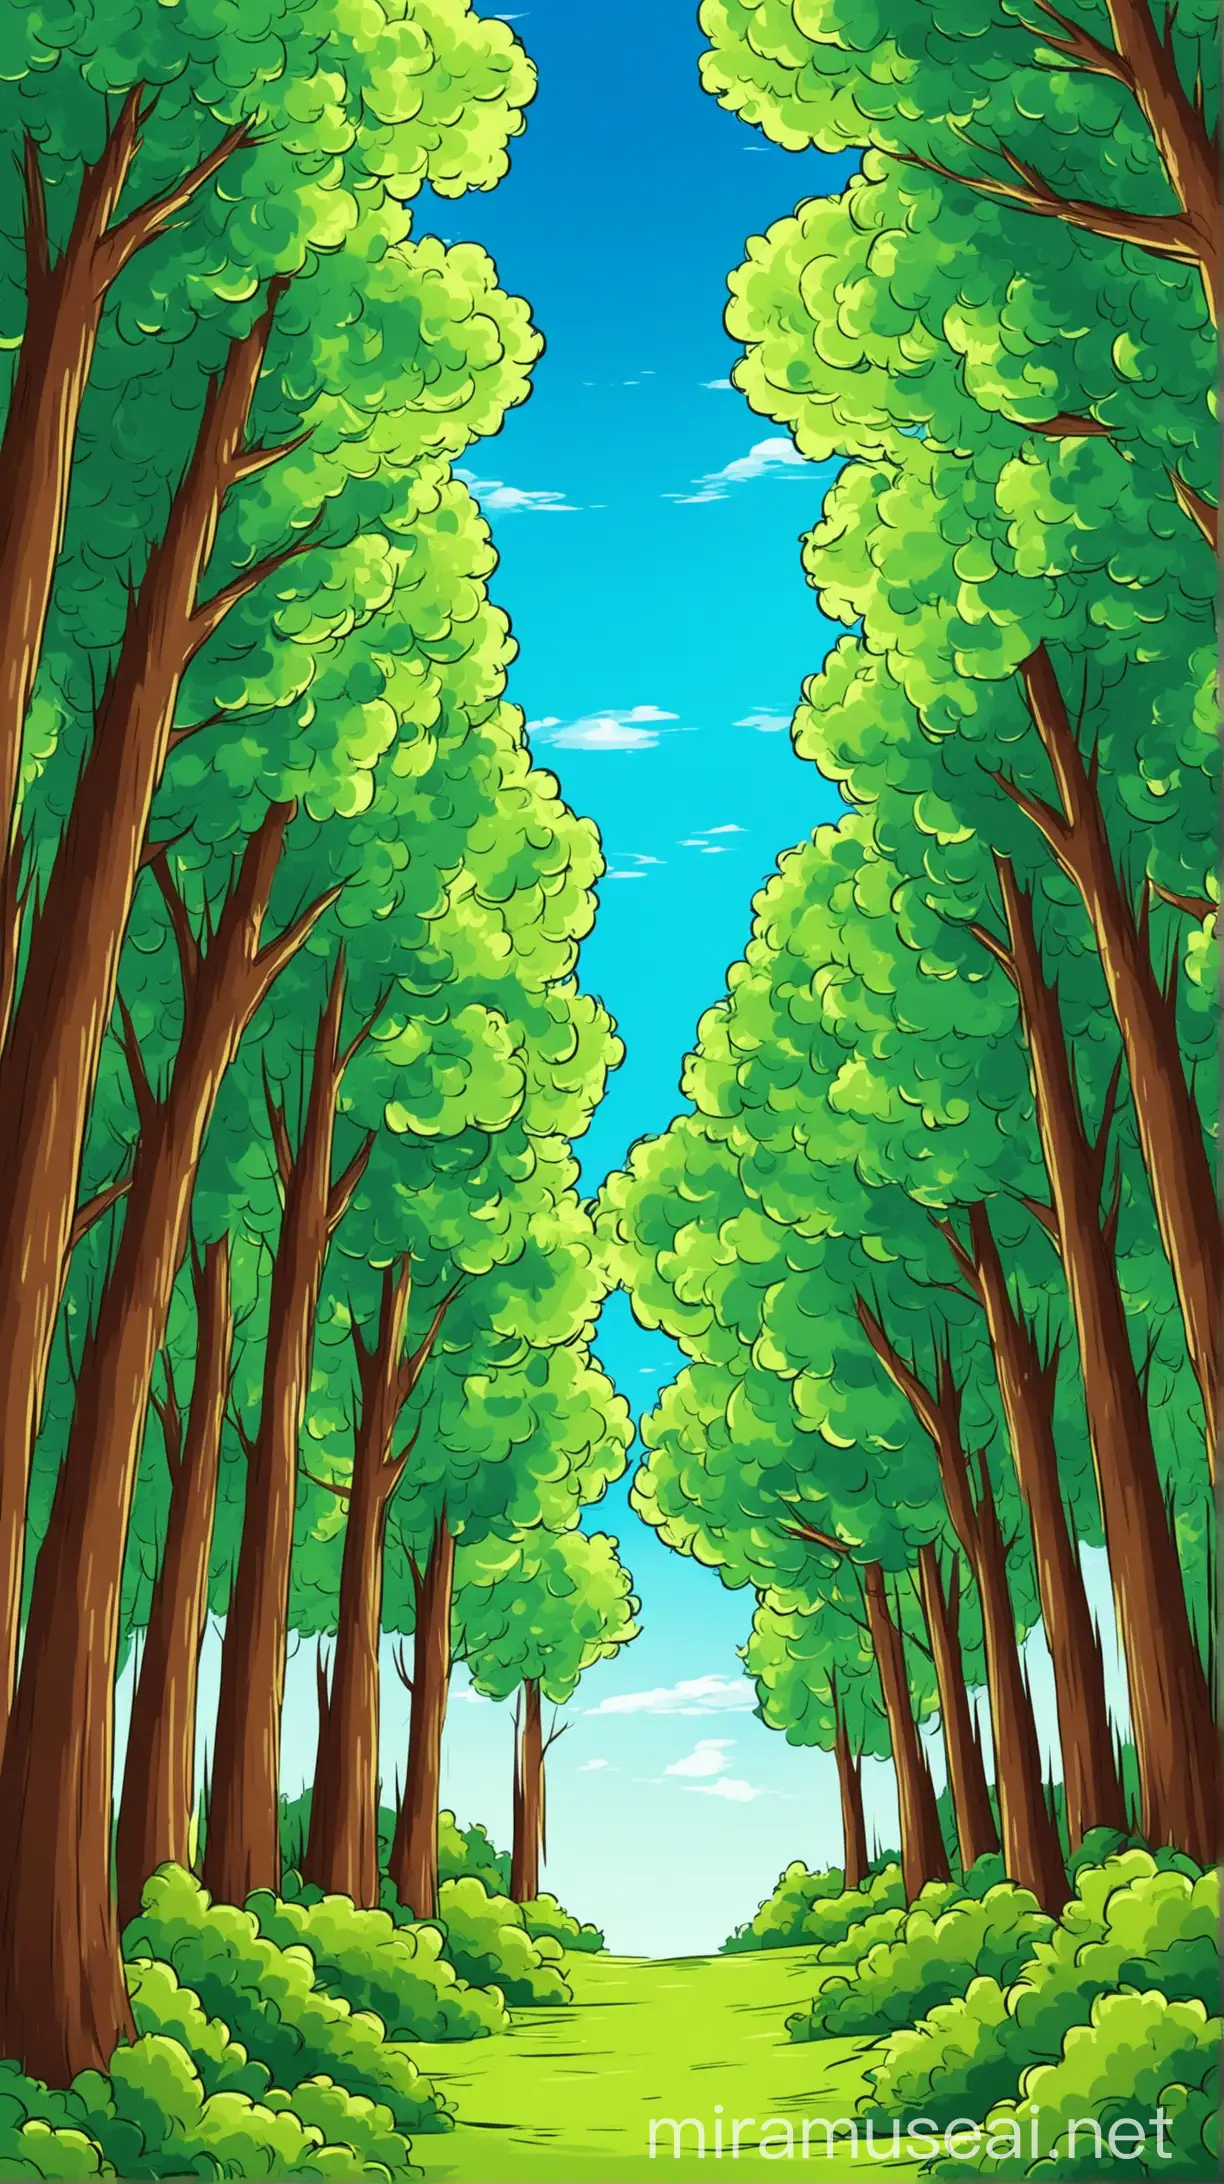 Cartoonish Forest Landscape with Blue Sky Background